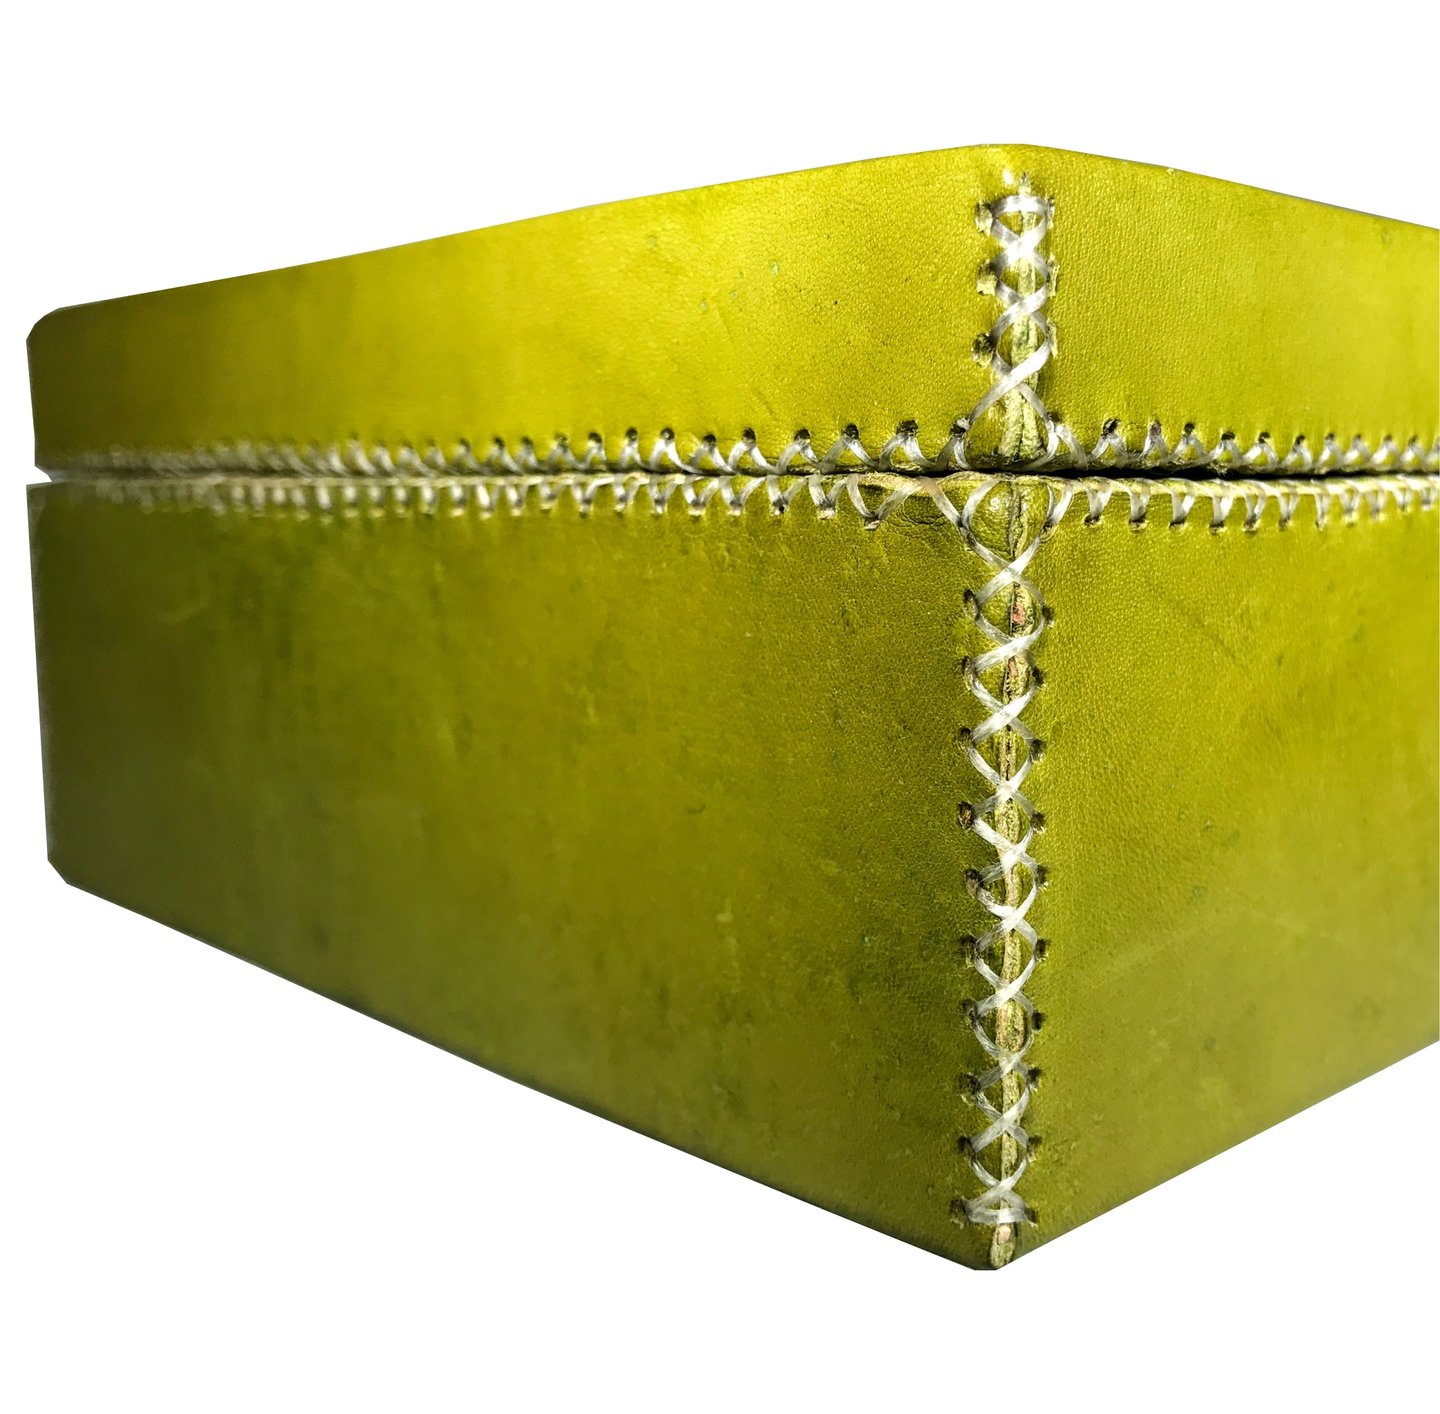 siete | handmade leather box | bati leather goods de paraguay, argentina